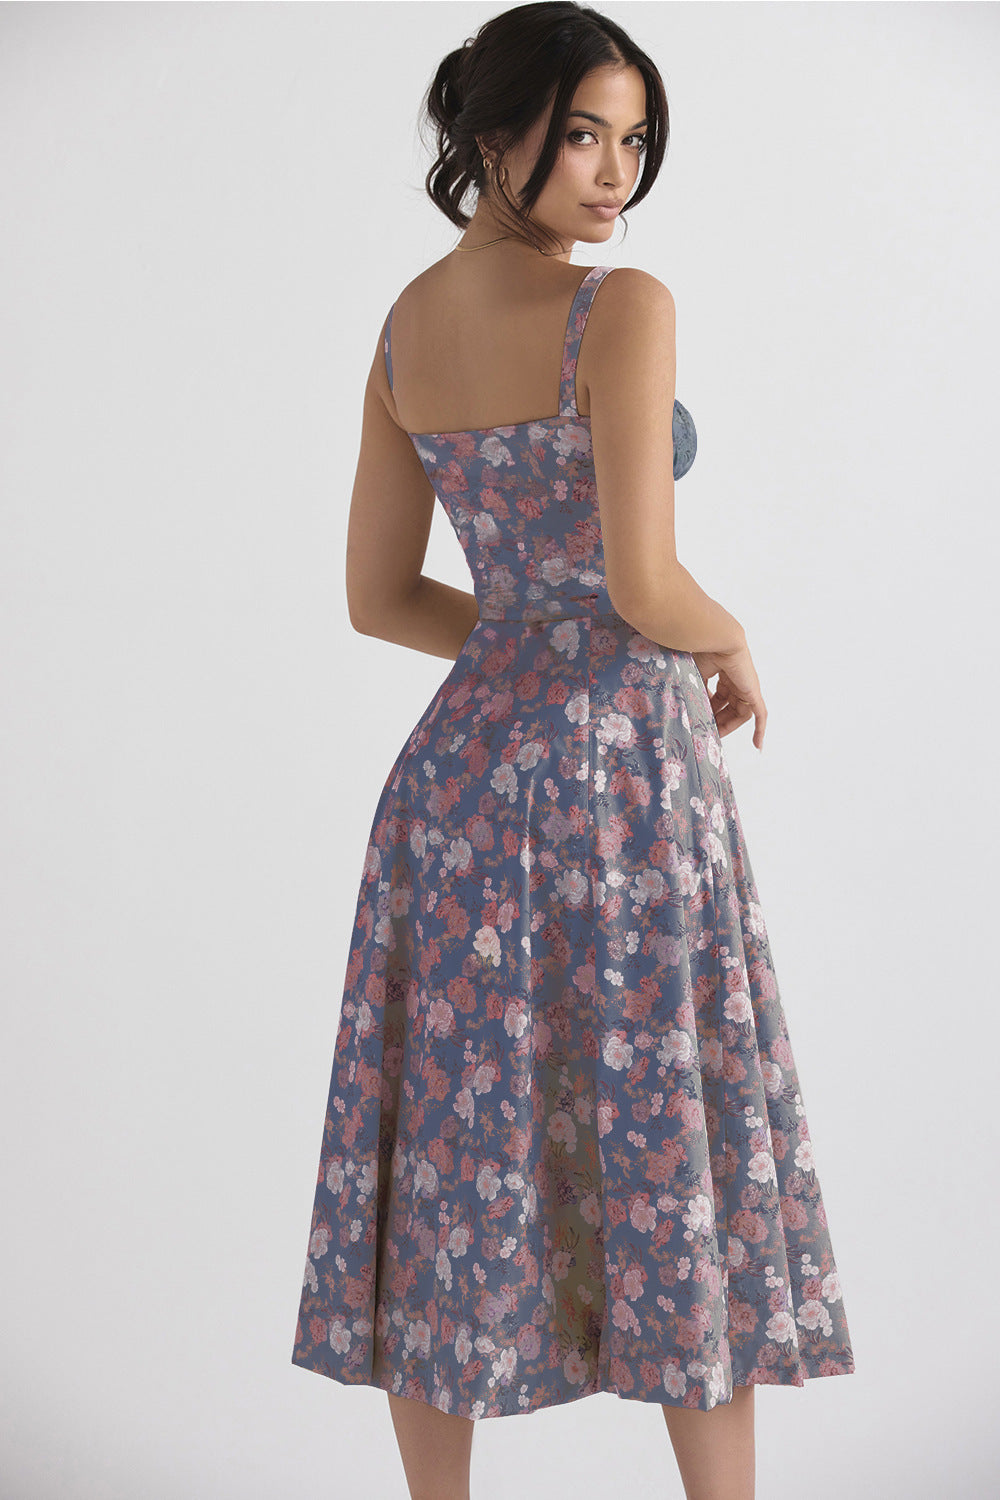 Athena - Elegant Midi Dress